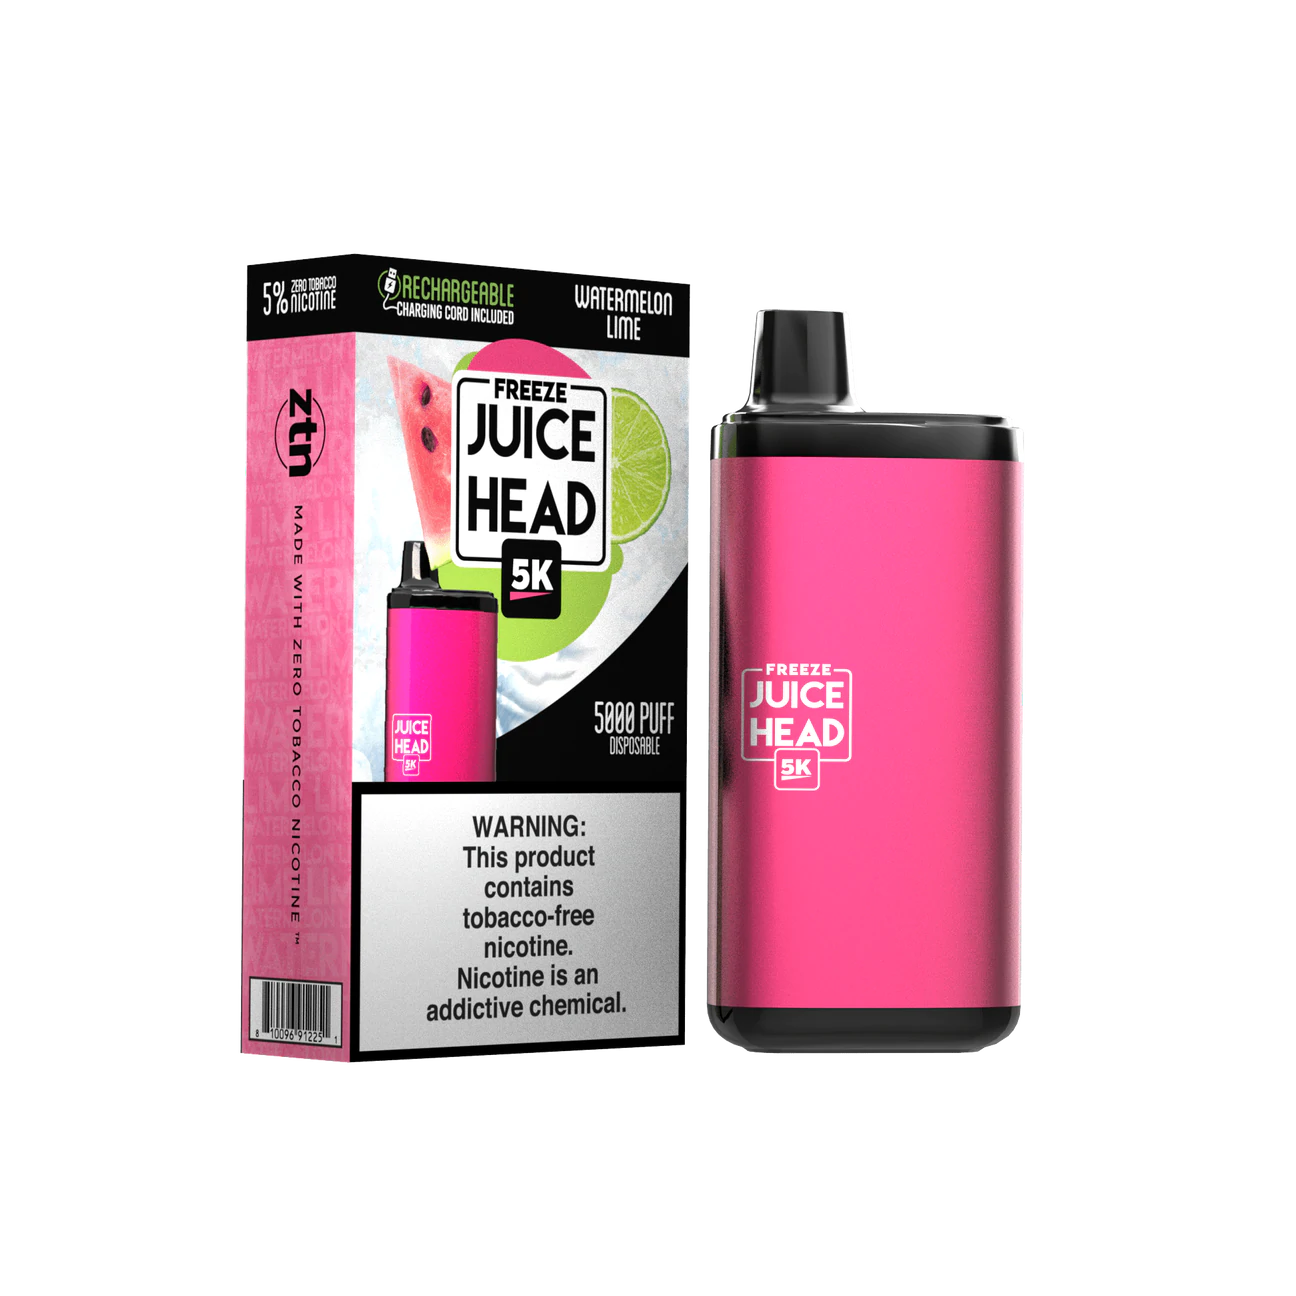 Juice Head 5000 Puffs Disposable Vape Device Watermelon Lime FREEZE